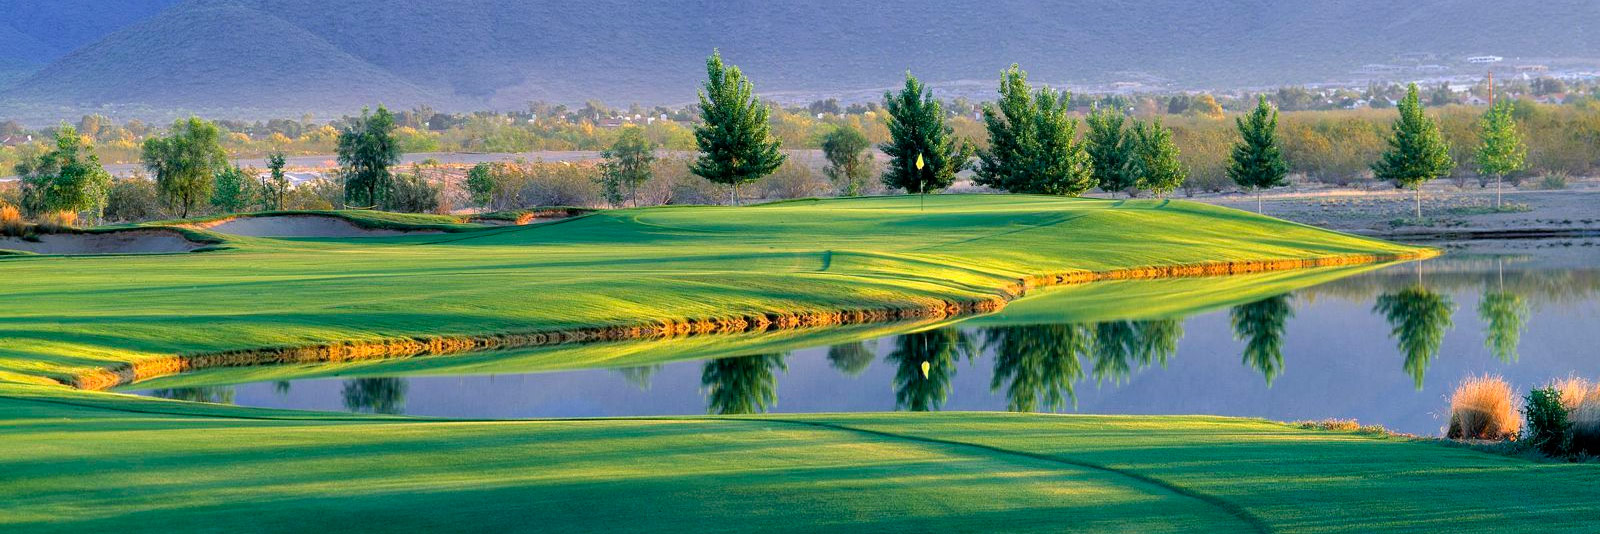 Phoenix/Scottsdale Golf Package: Villas at TPC Scottsdale + SunRidge / Eagle Mountain / Talking Stick / Raven for $189 per person, per day!